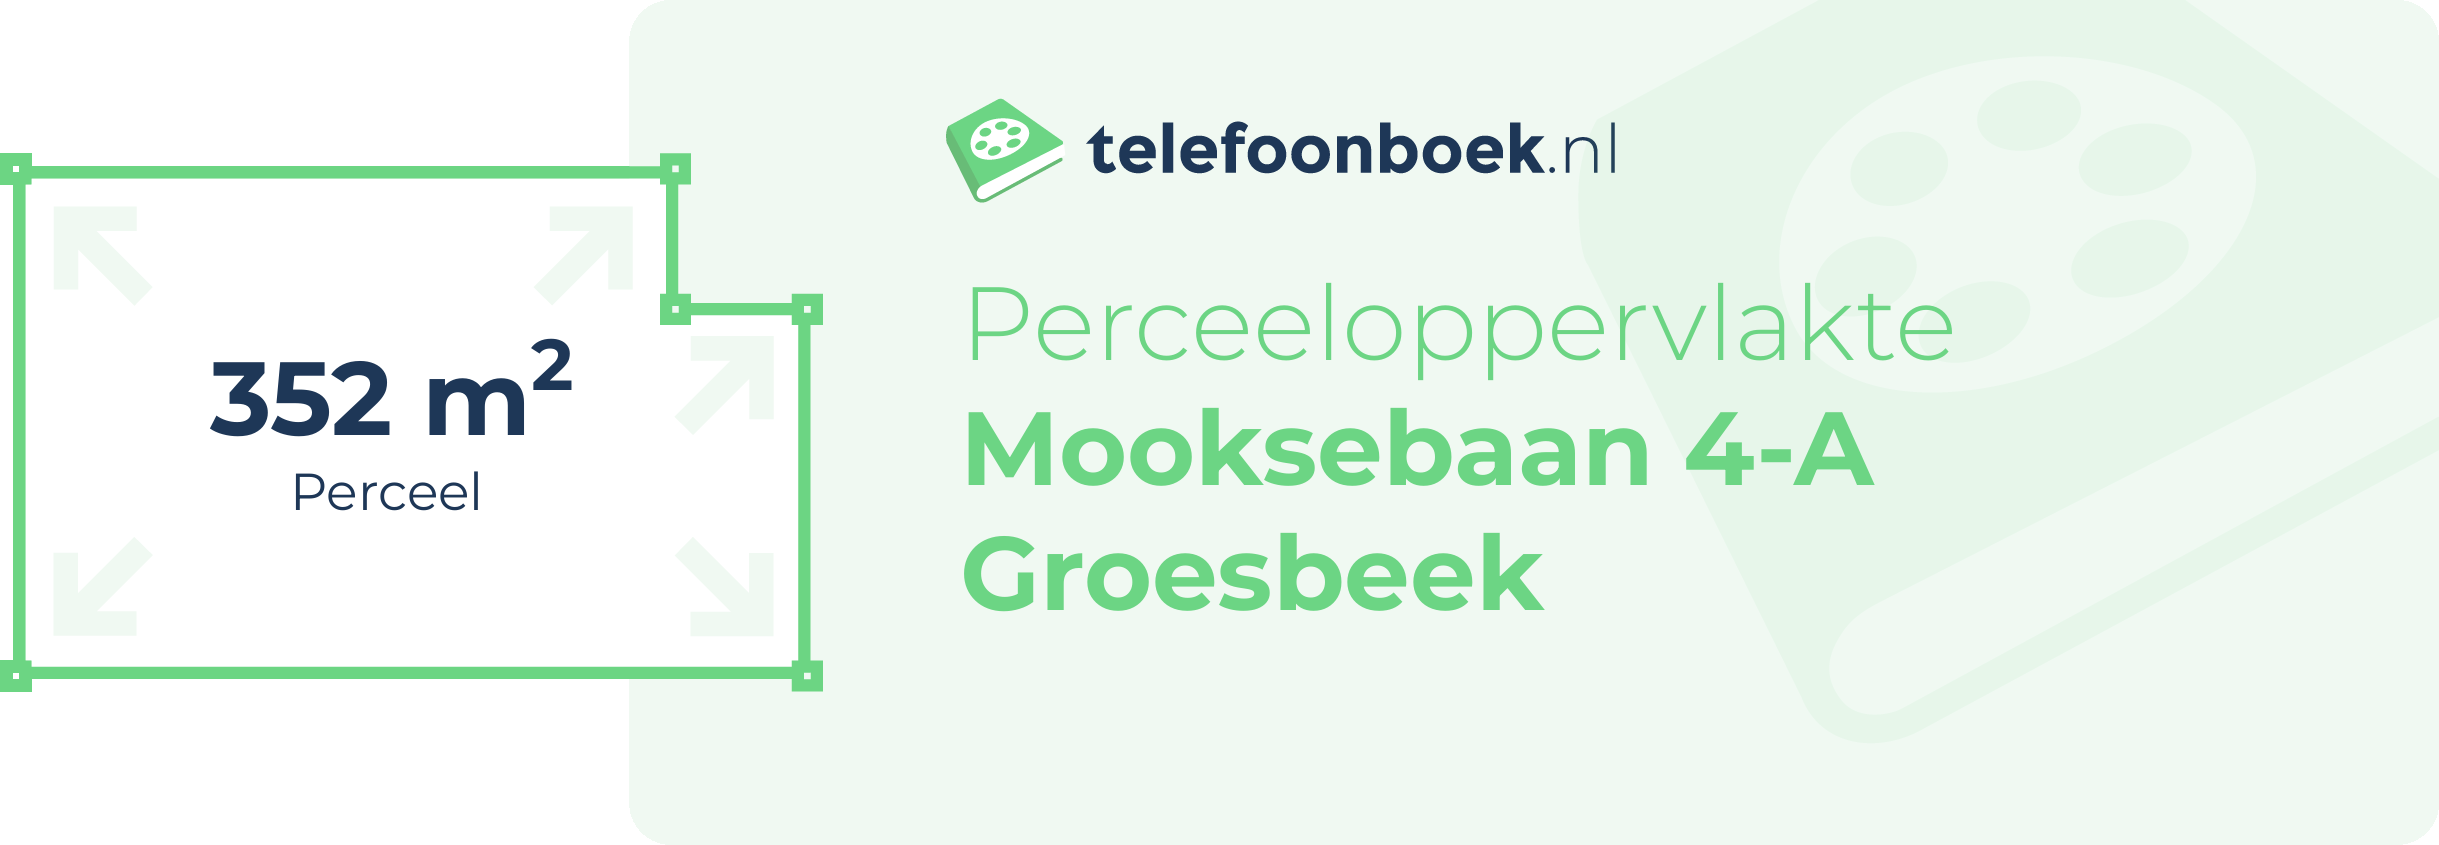 Perceeloppervlakte Mooksebaan 4-A Groesbeek